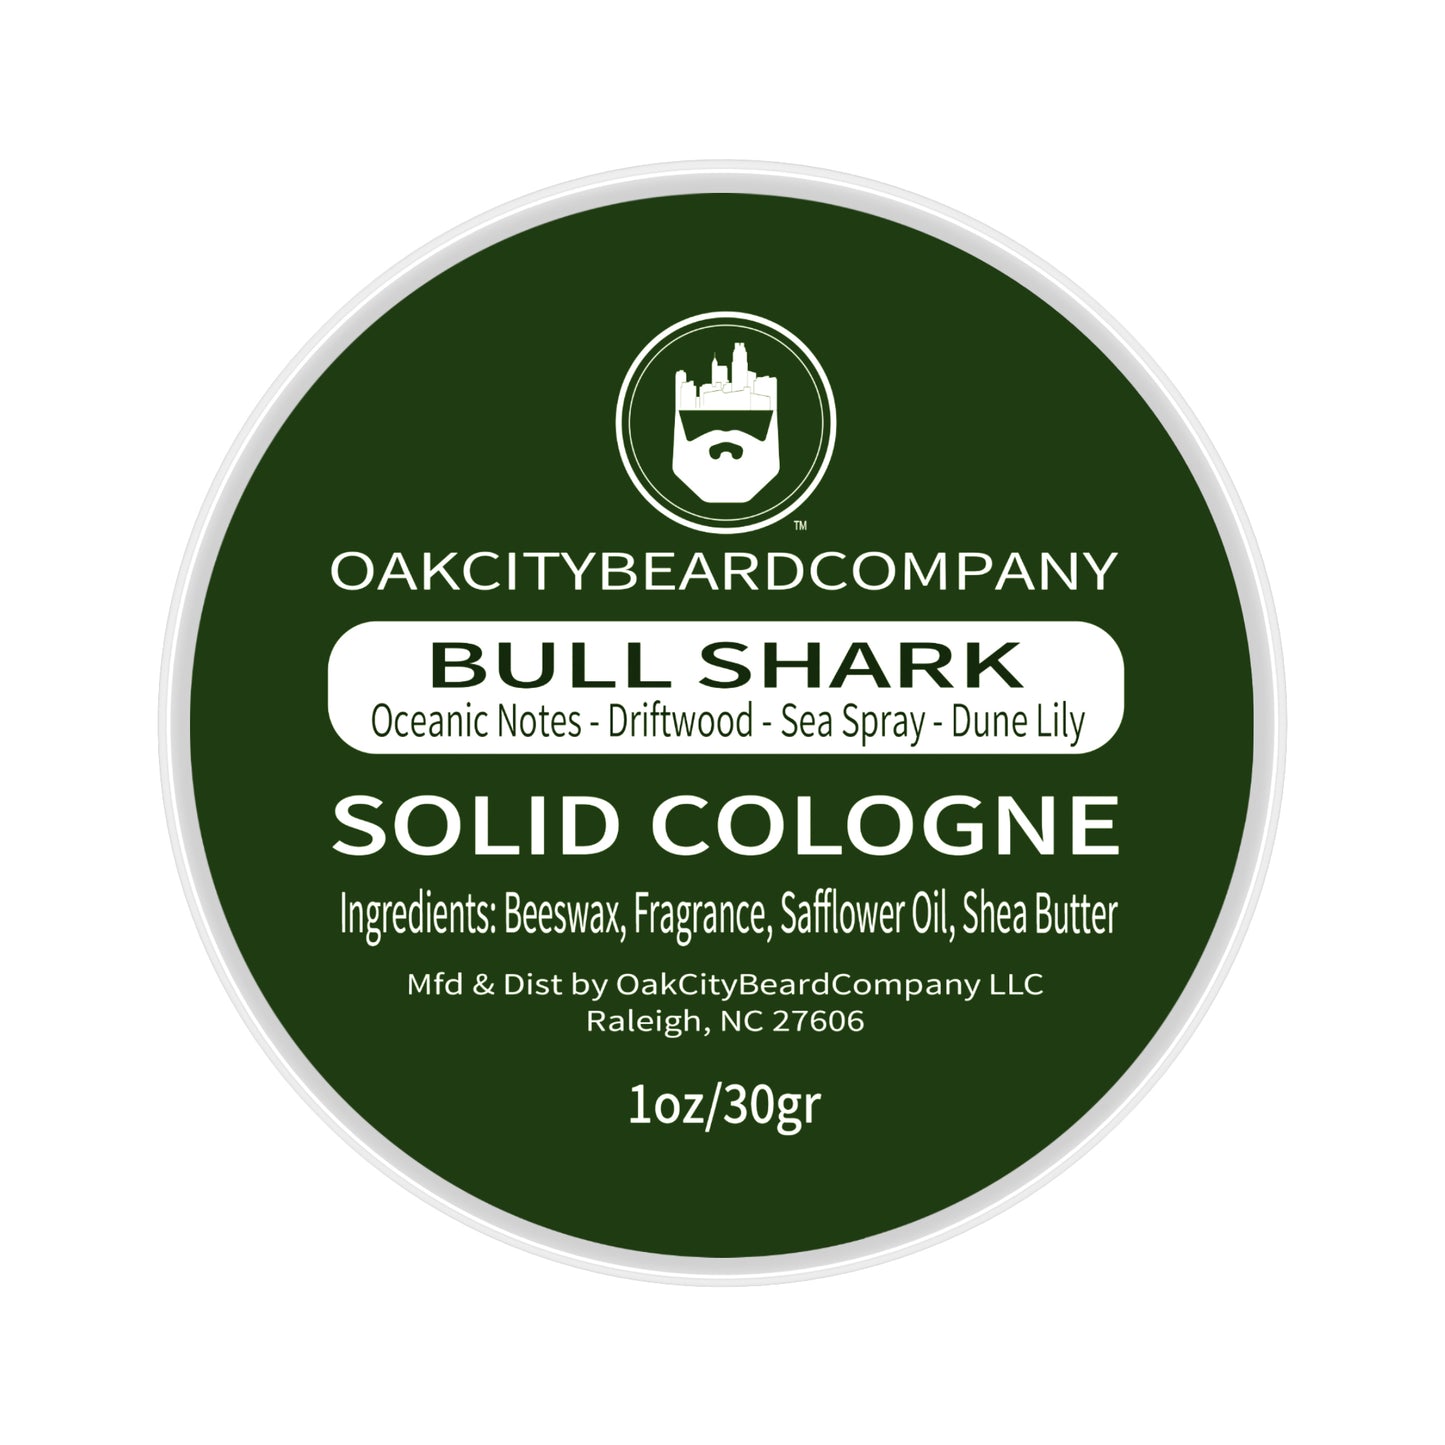 Bull Shark (Solid Cologne) by Oak City Beard Company